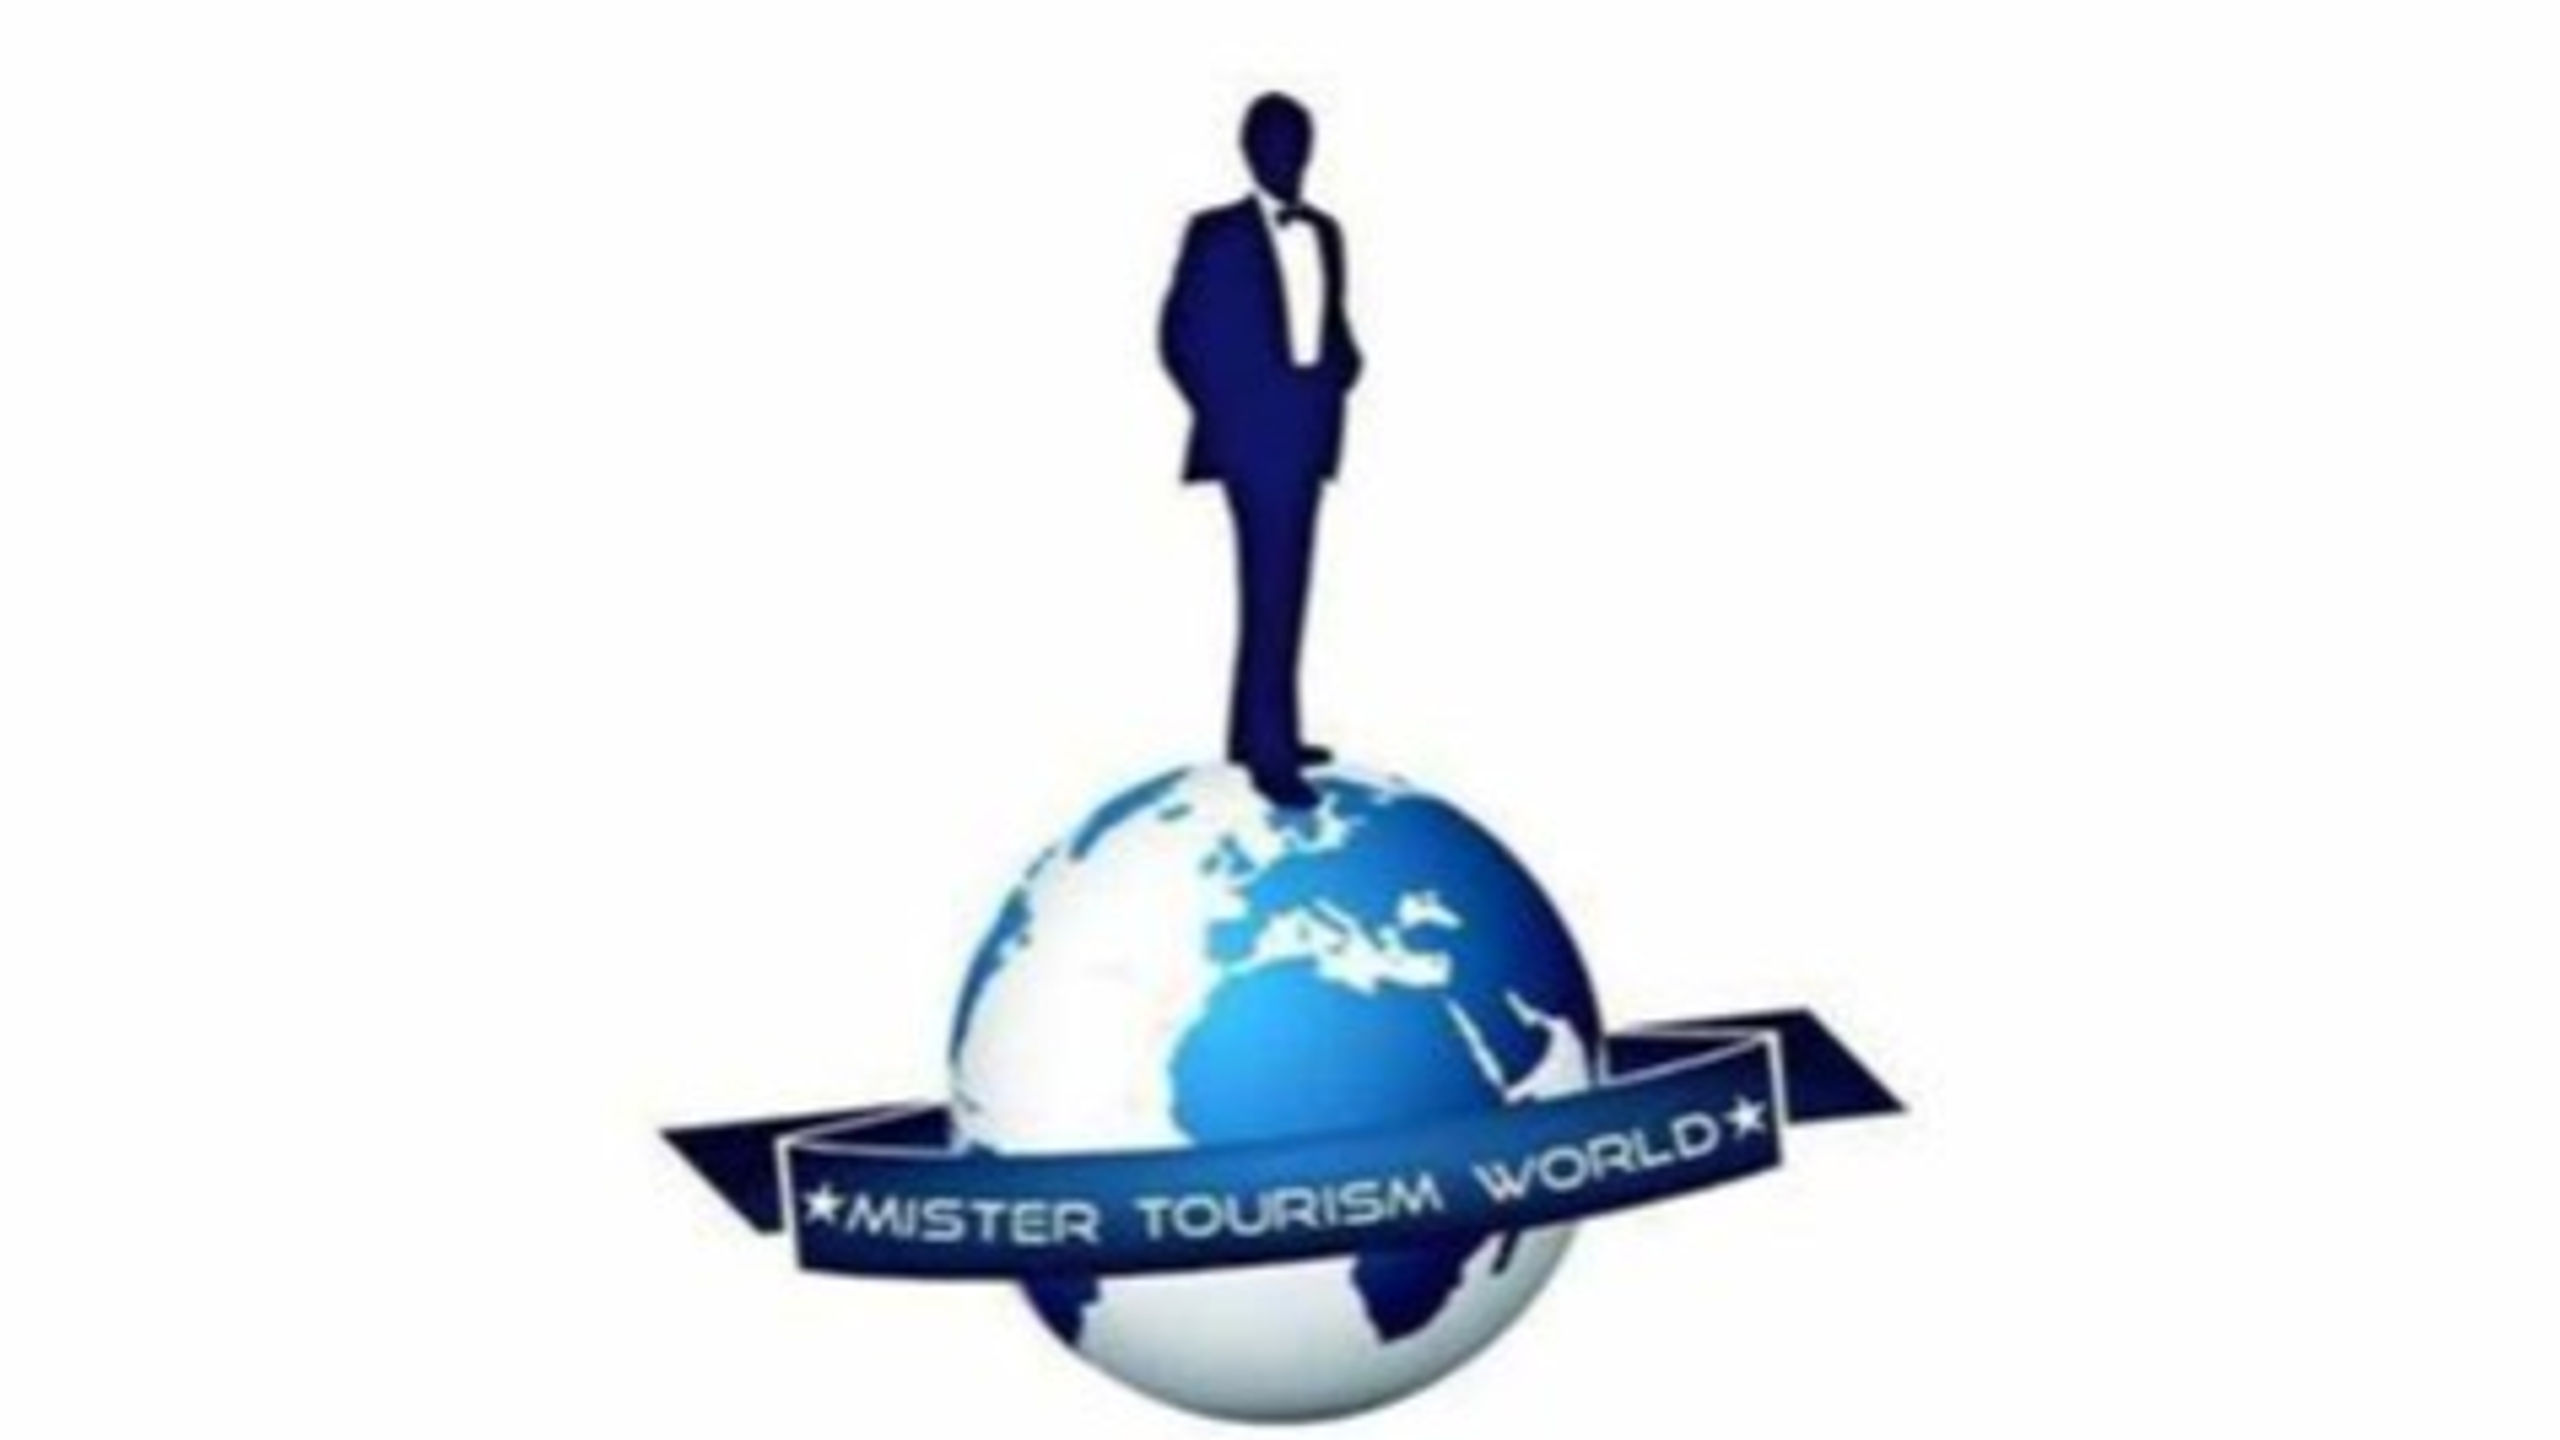 Mister Tourism World Official